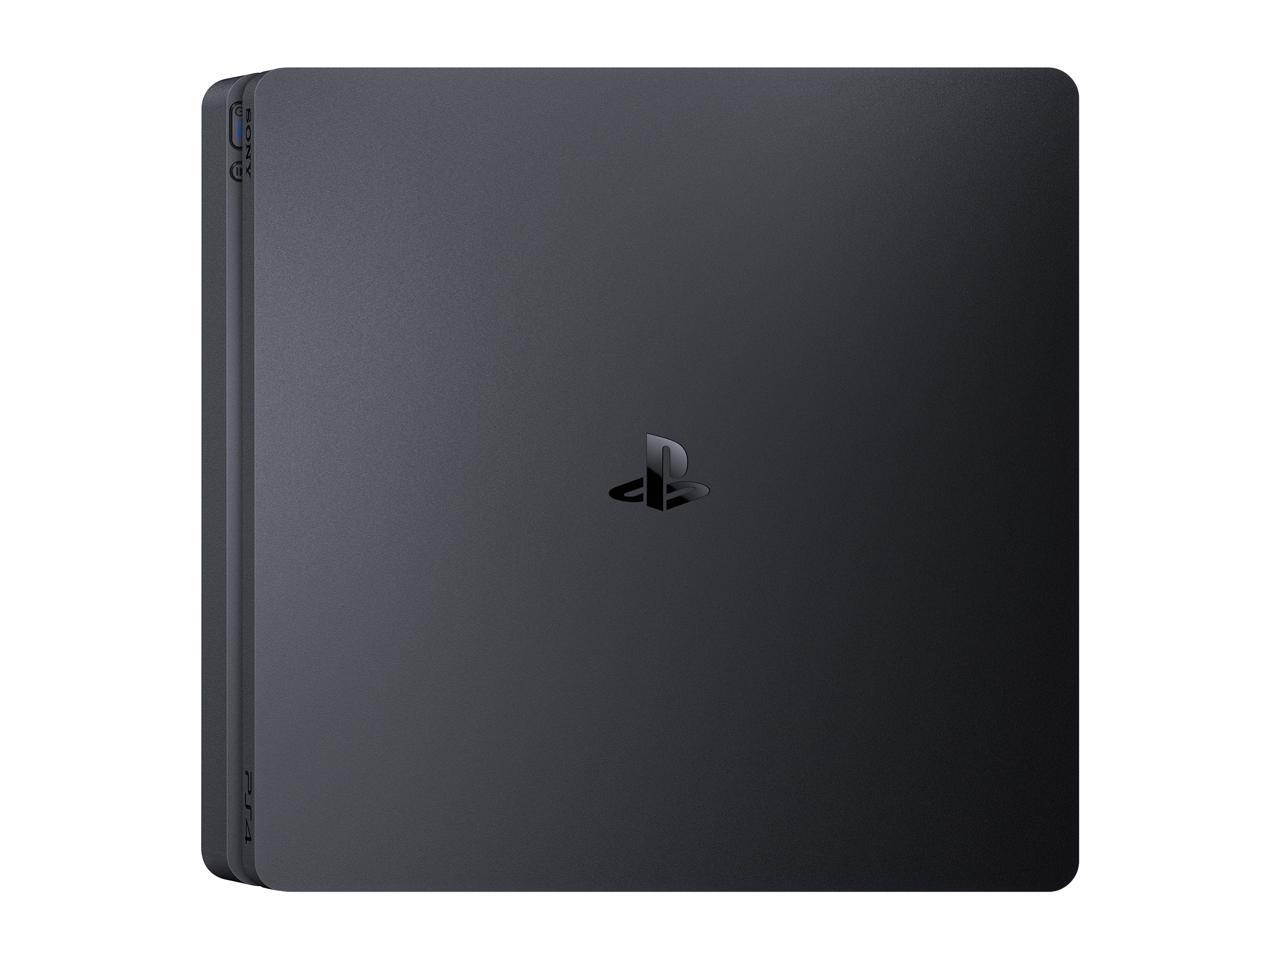 PlayStation 4 Slim 1TB Console - Newegg.com